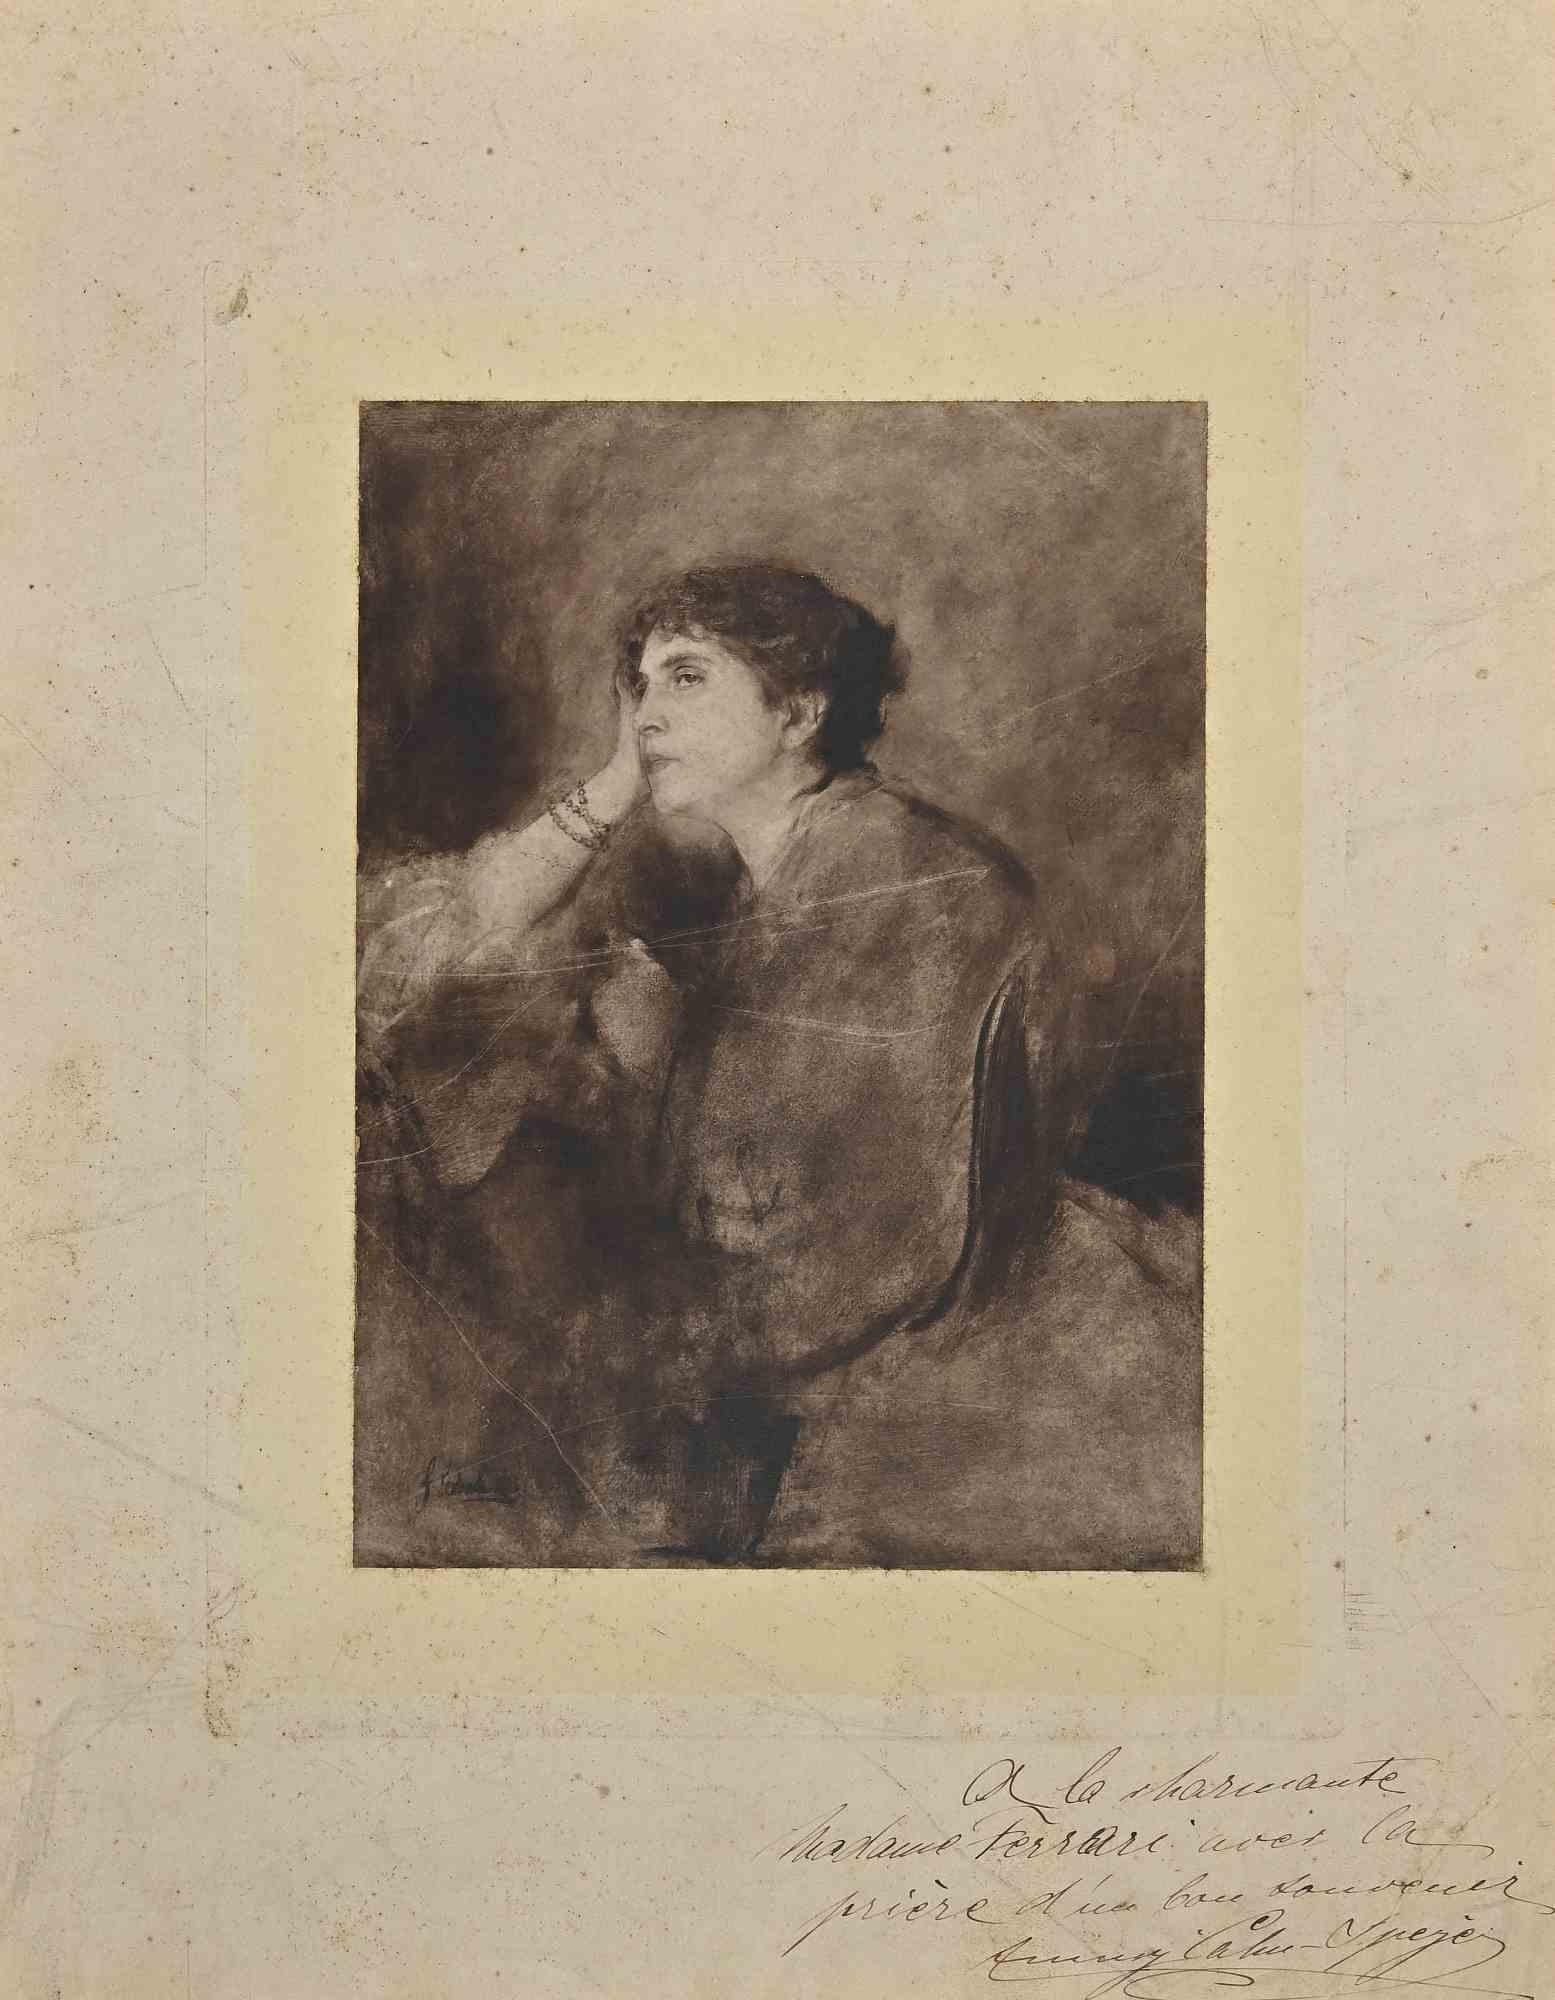 Unknown Black and White Photograph - The Portrait of Madame Ferrari- Photograph - 19th Century